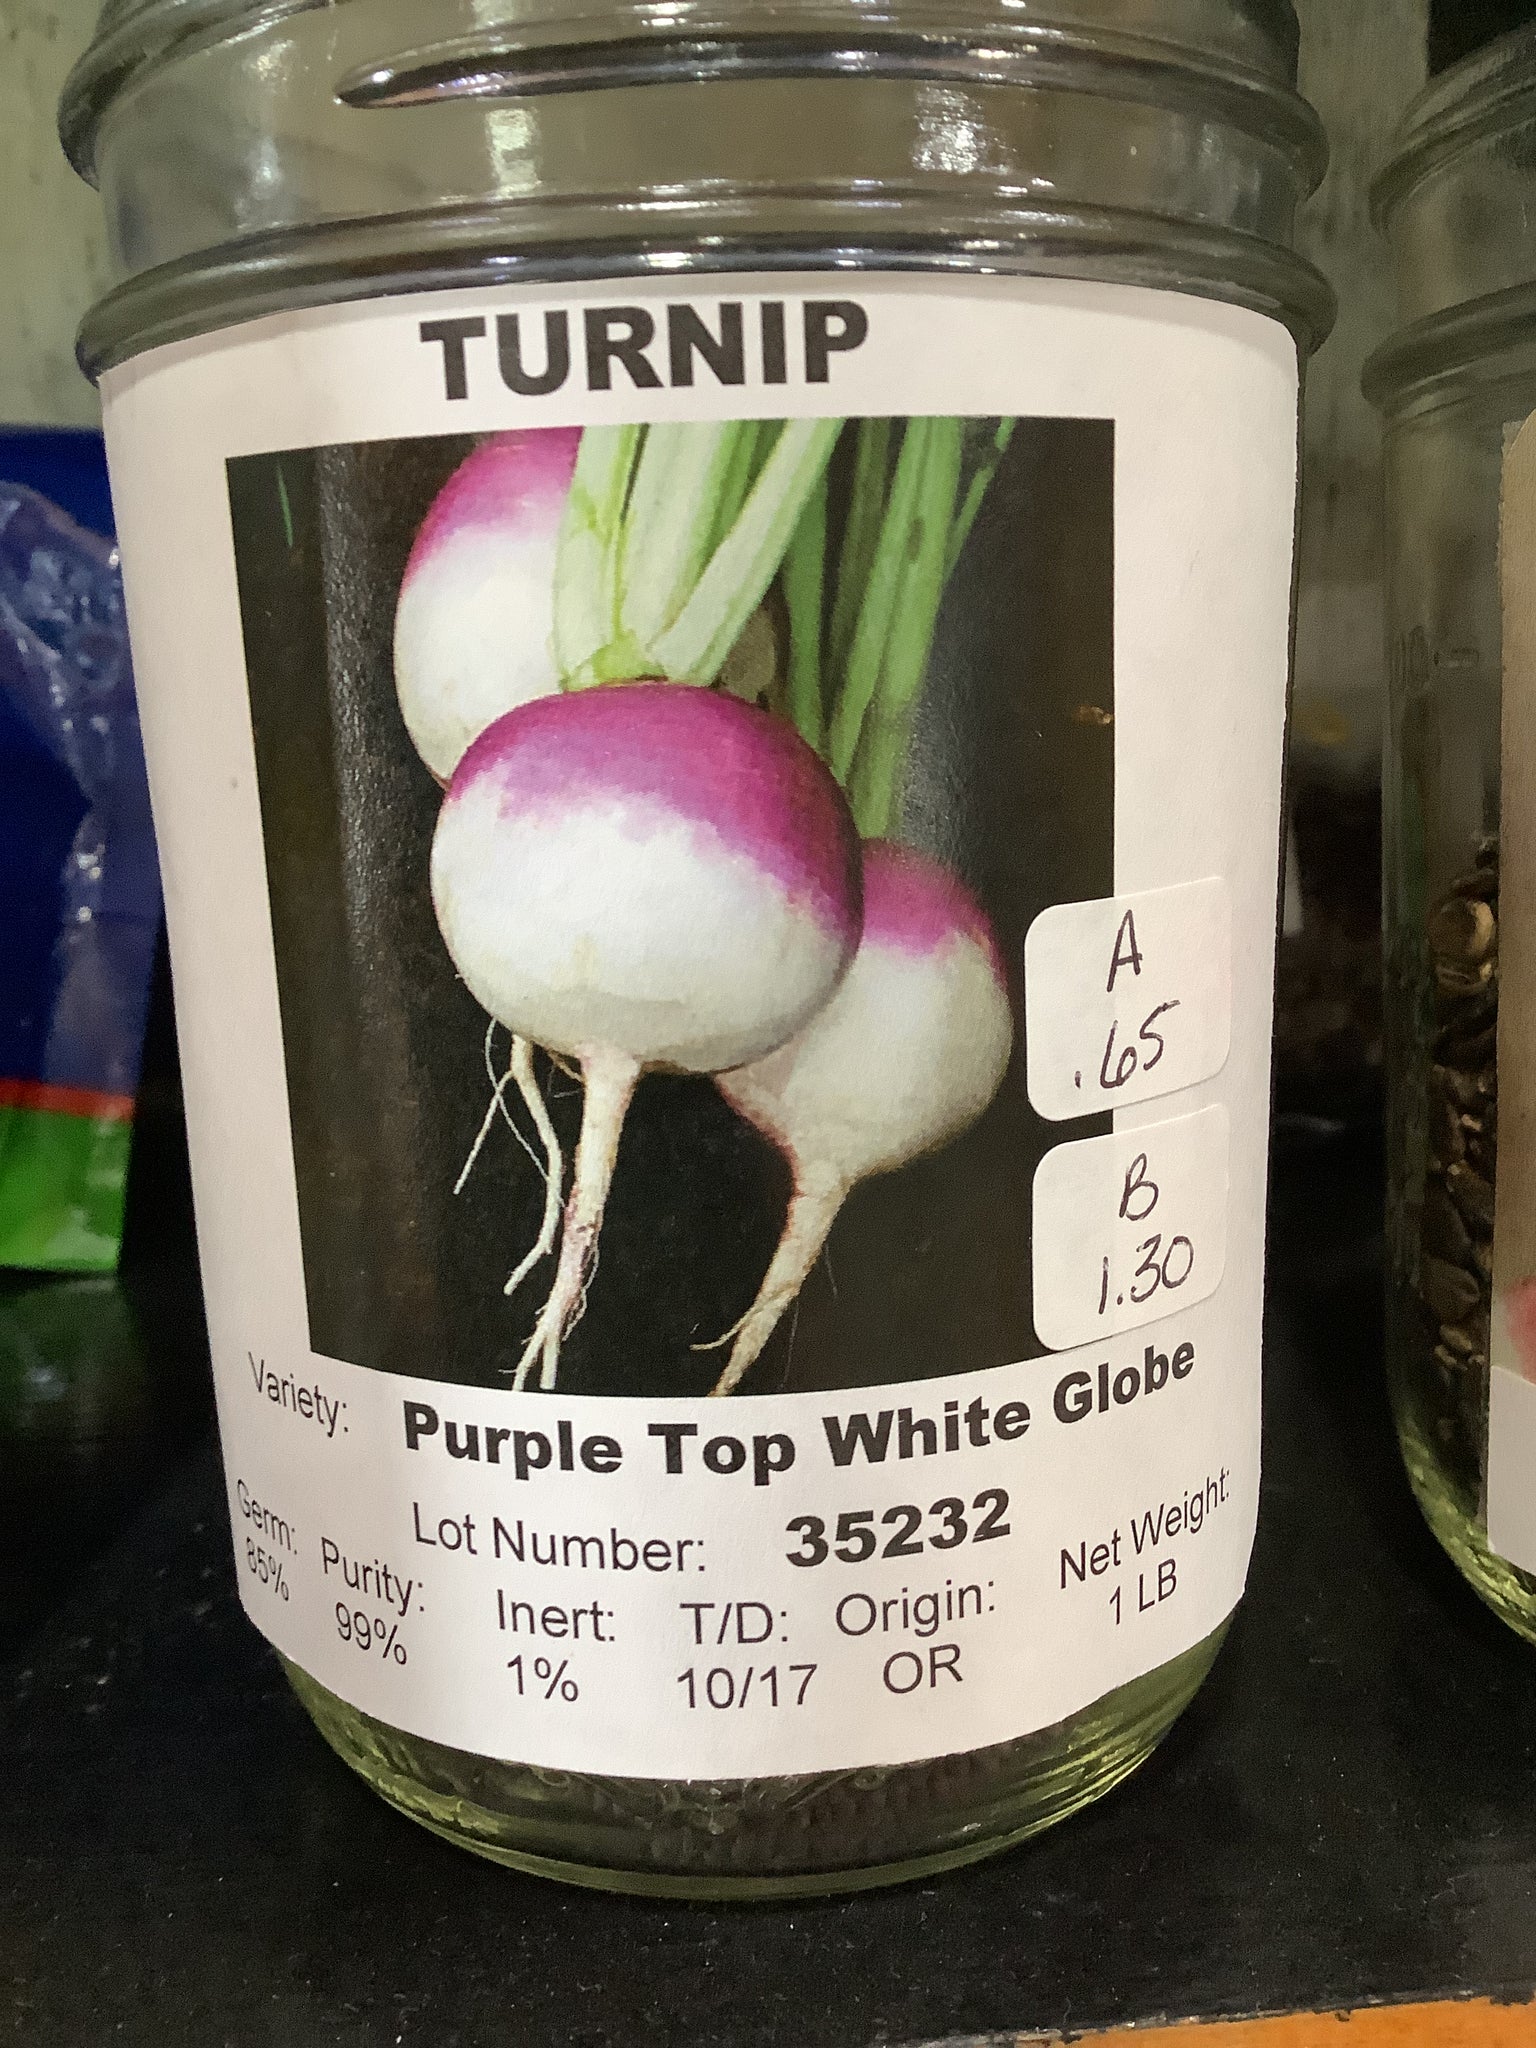 Turnip-Purple top white globe